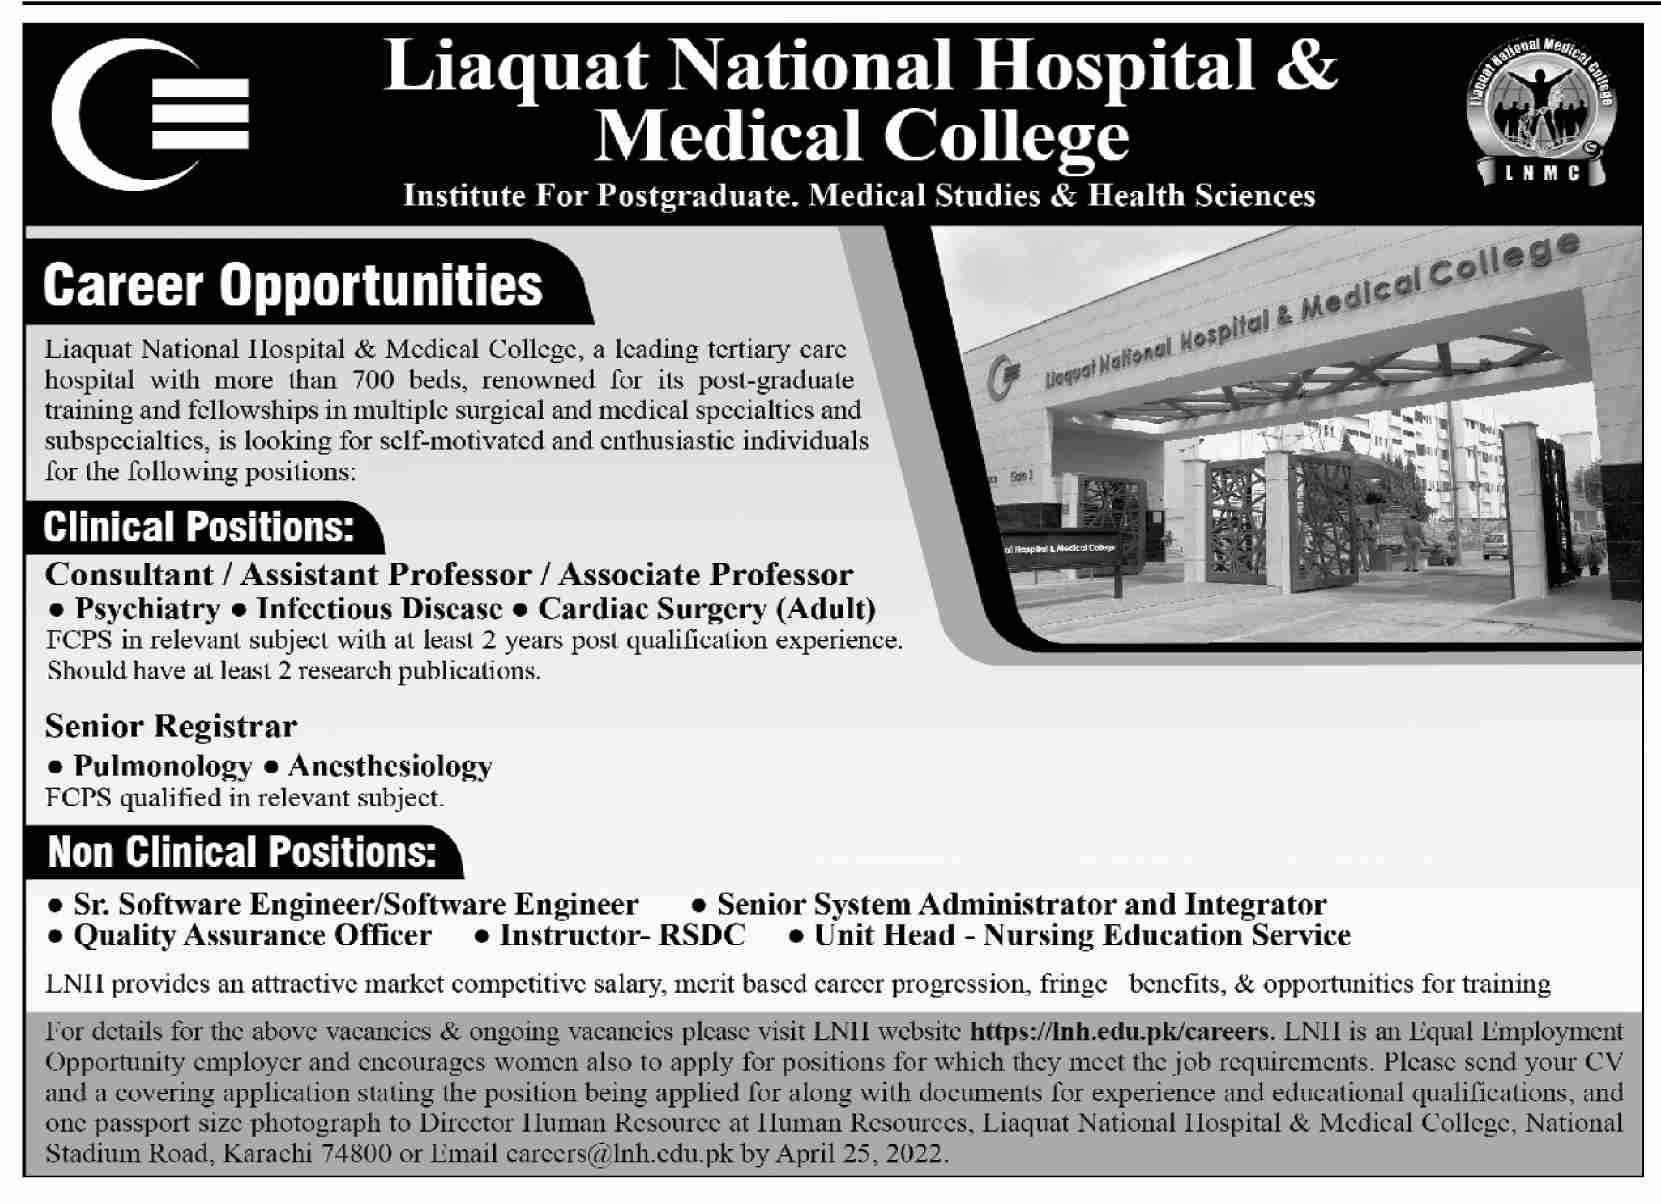 Latest Liaquat National Hospital & Medical College Medical Posts Karachi 2022